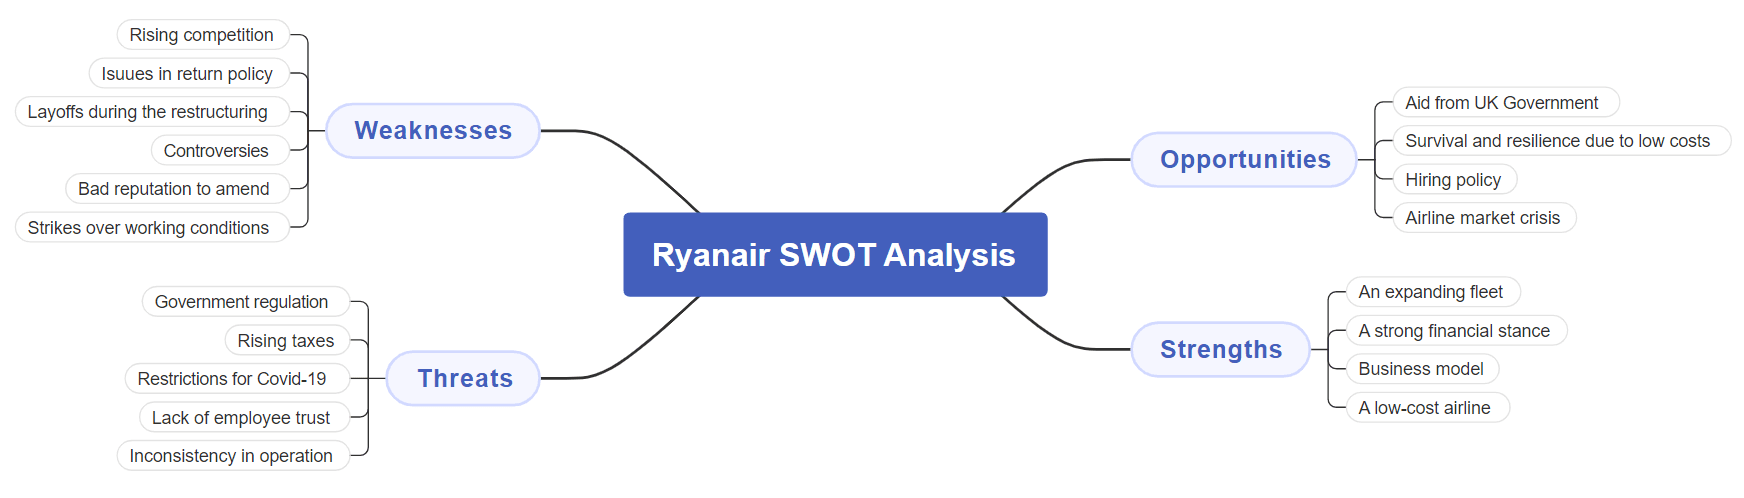 Ryanair SWOT Analysis mind map